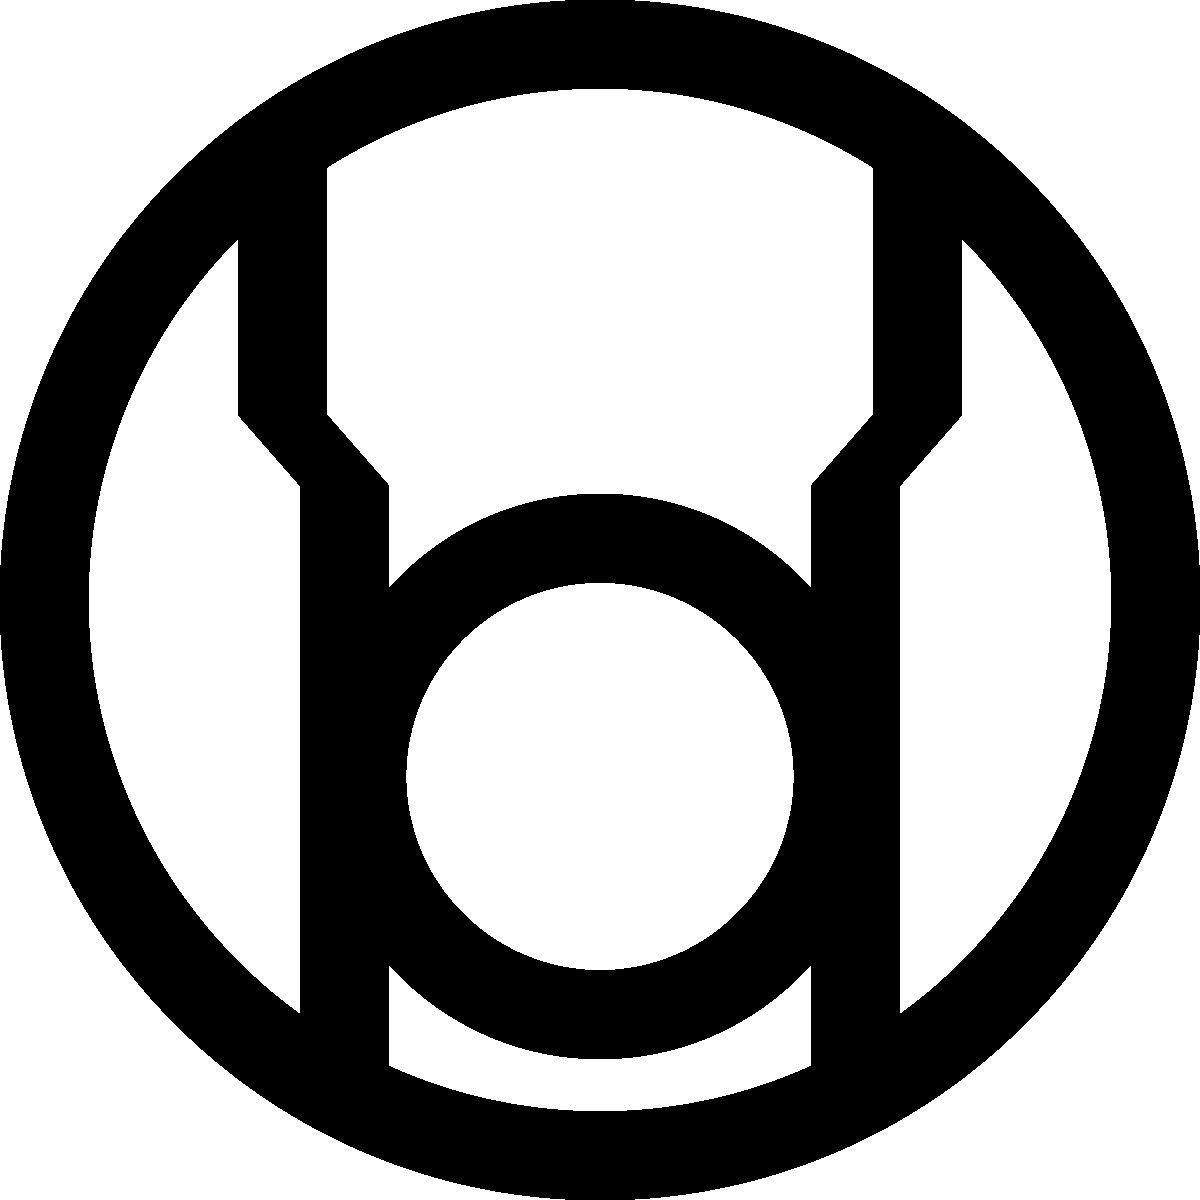 Black Lantern Logo - Black Lantern Corps Symbol Outline By Mr Droy D6155w6 Red D613gsx